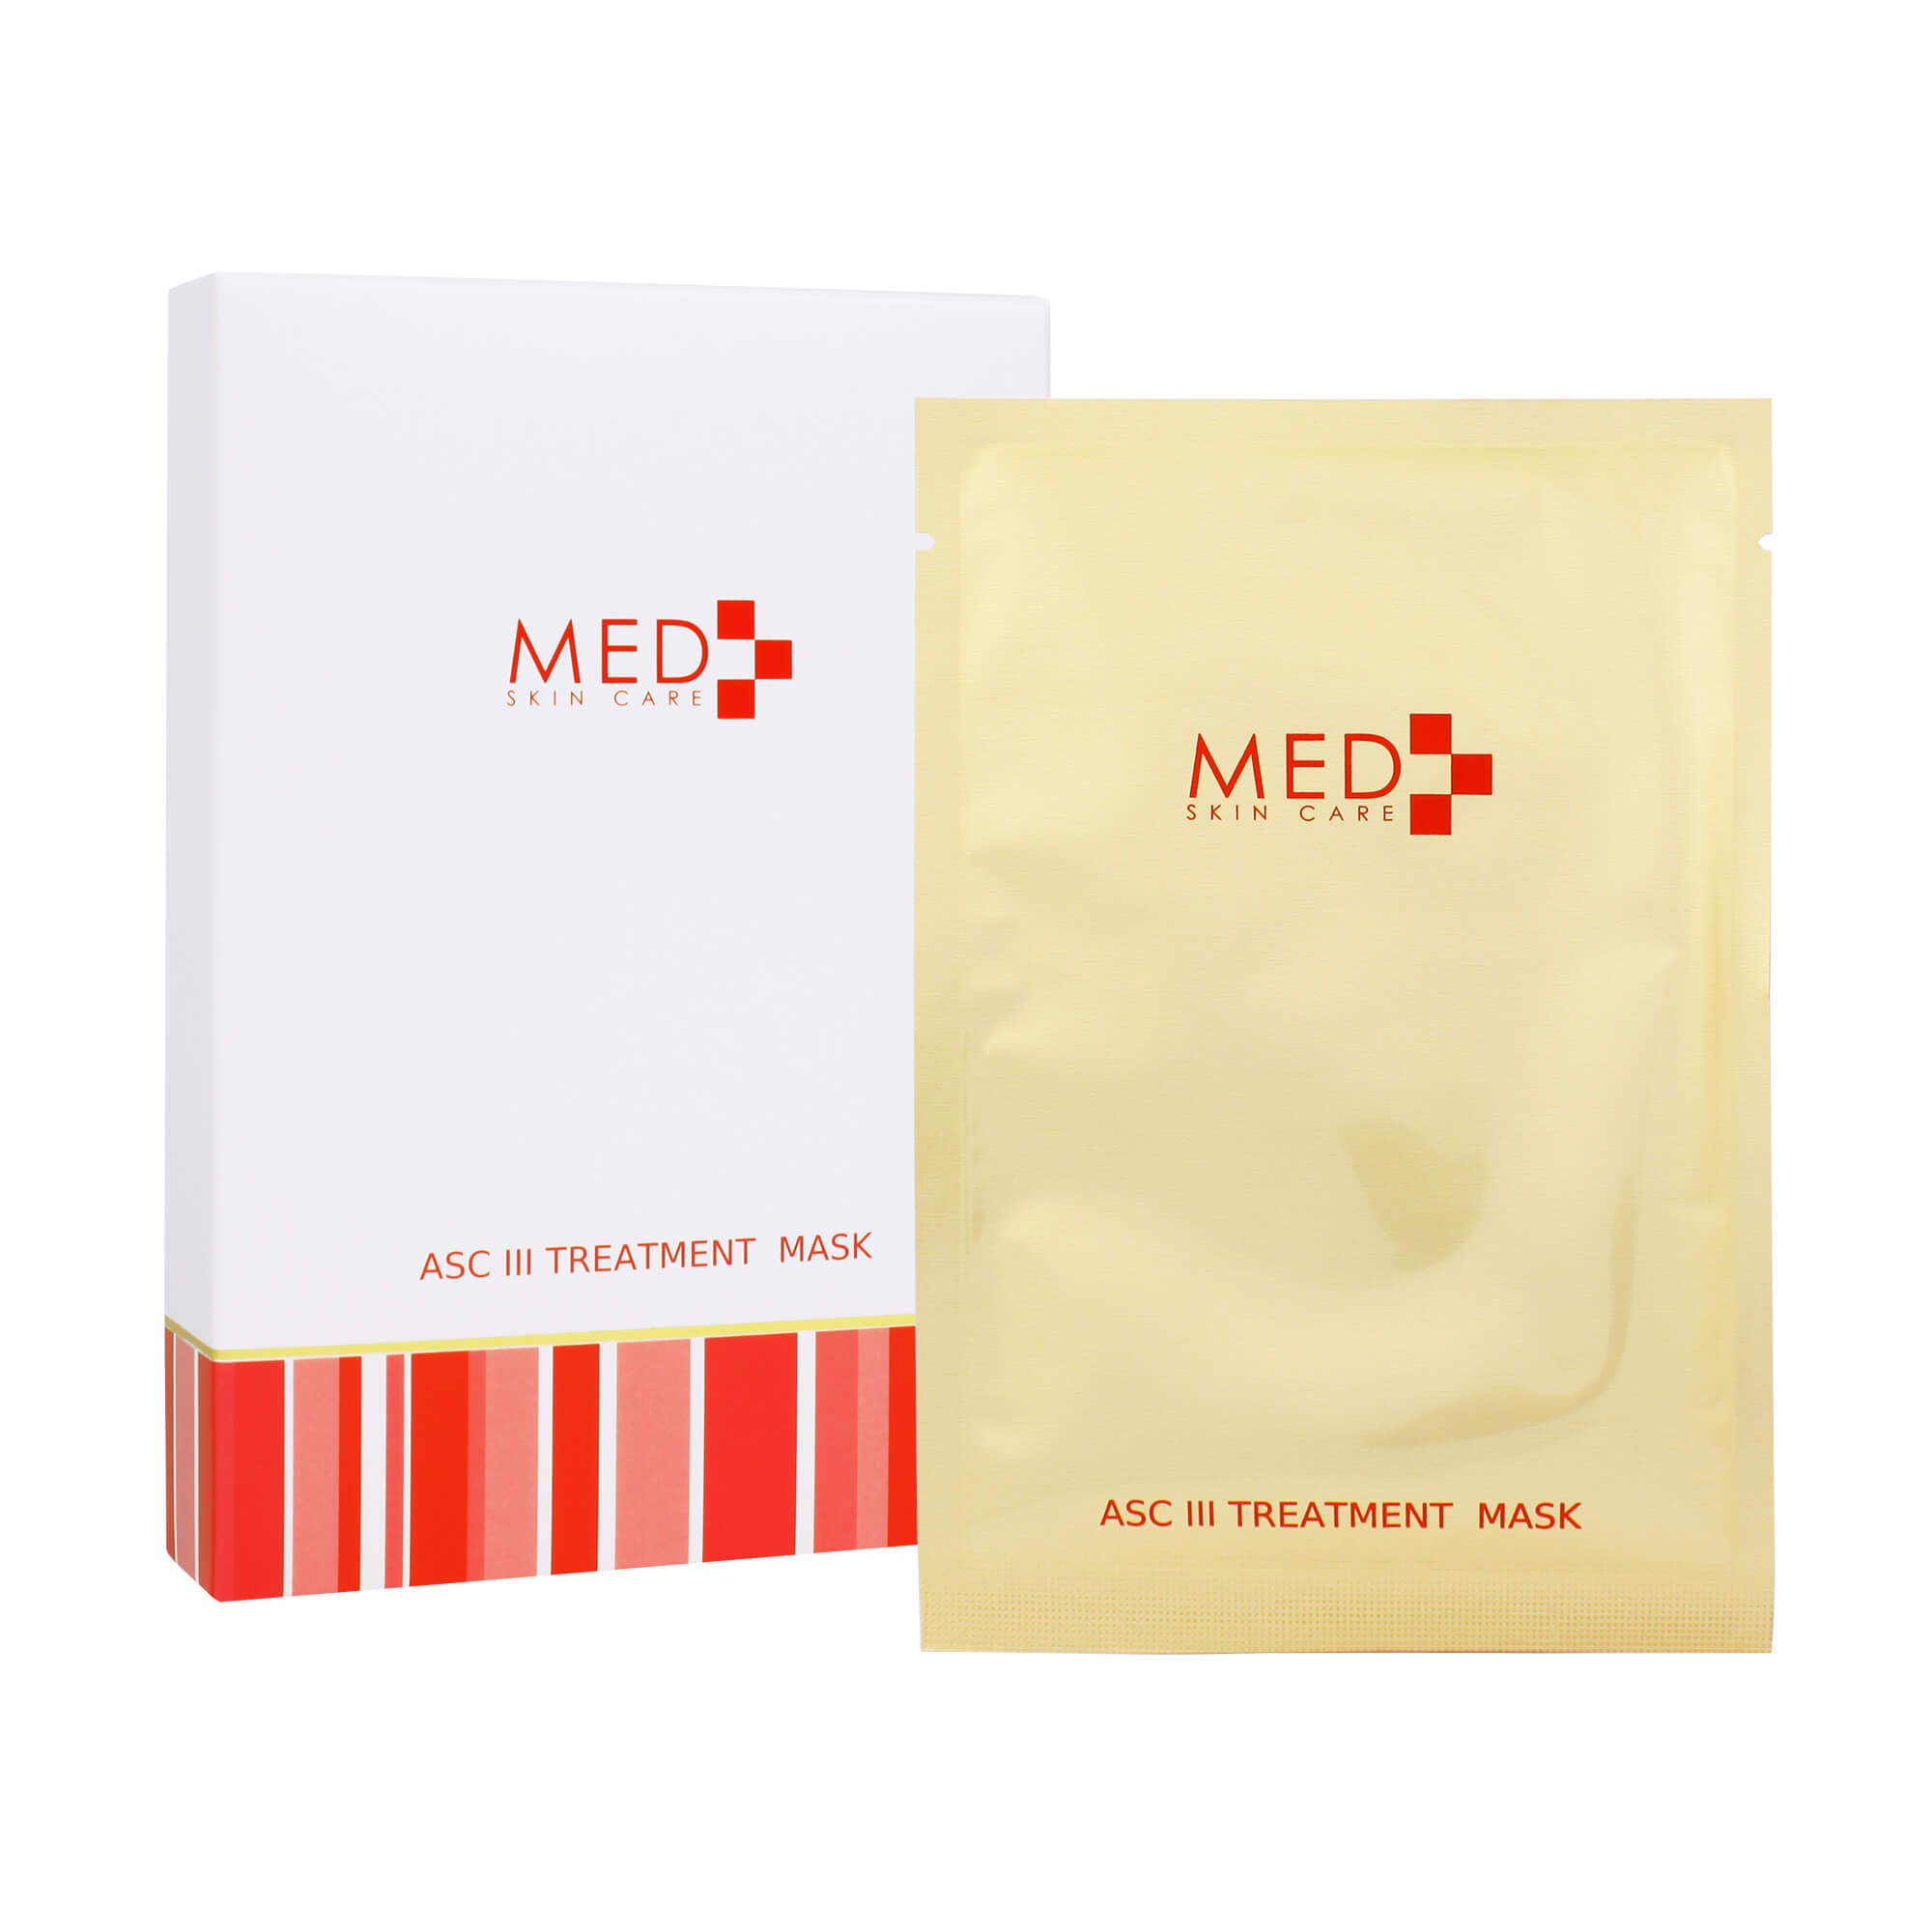 MED Skin Care ASC III Treatment Mask 5 pcs